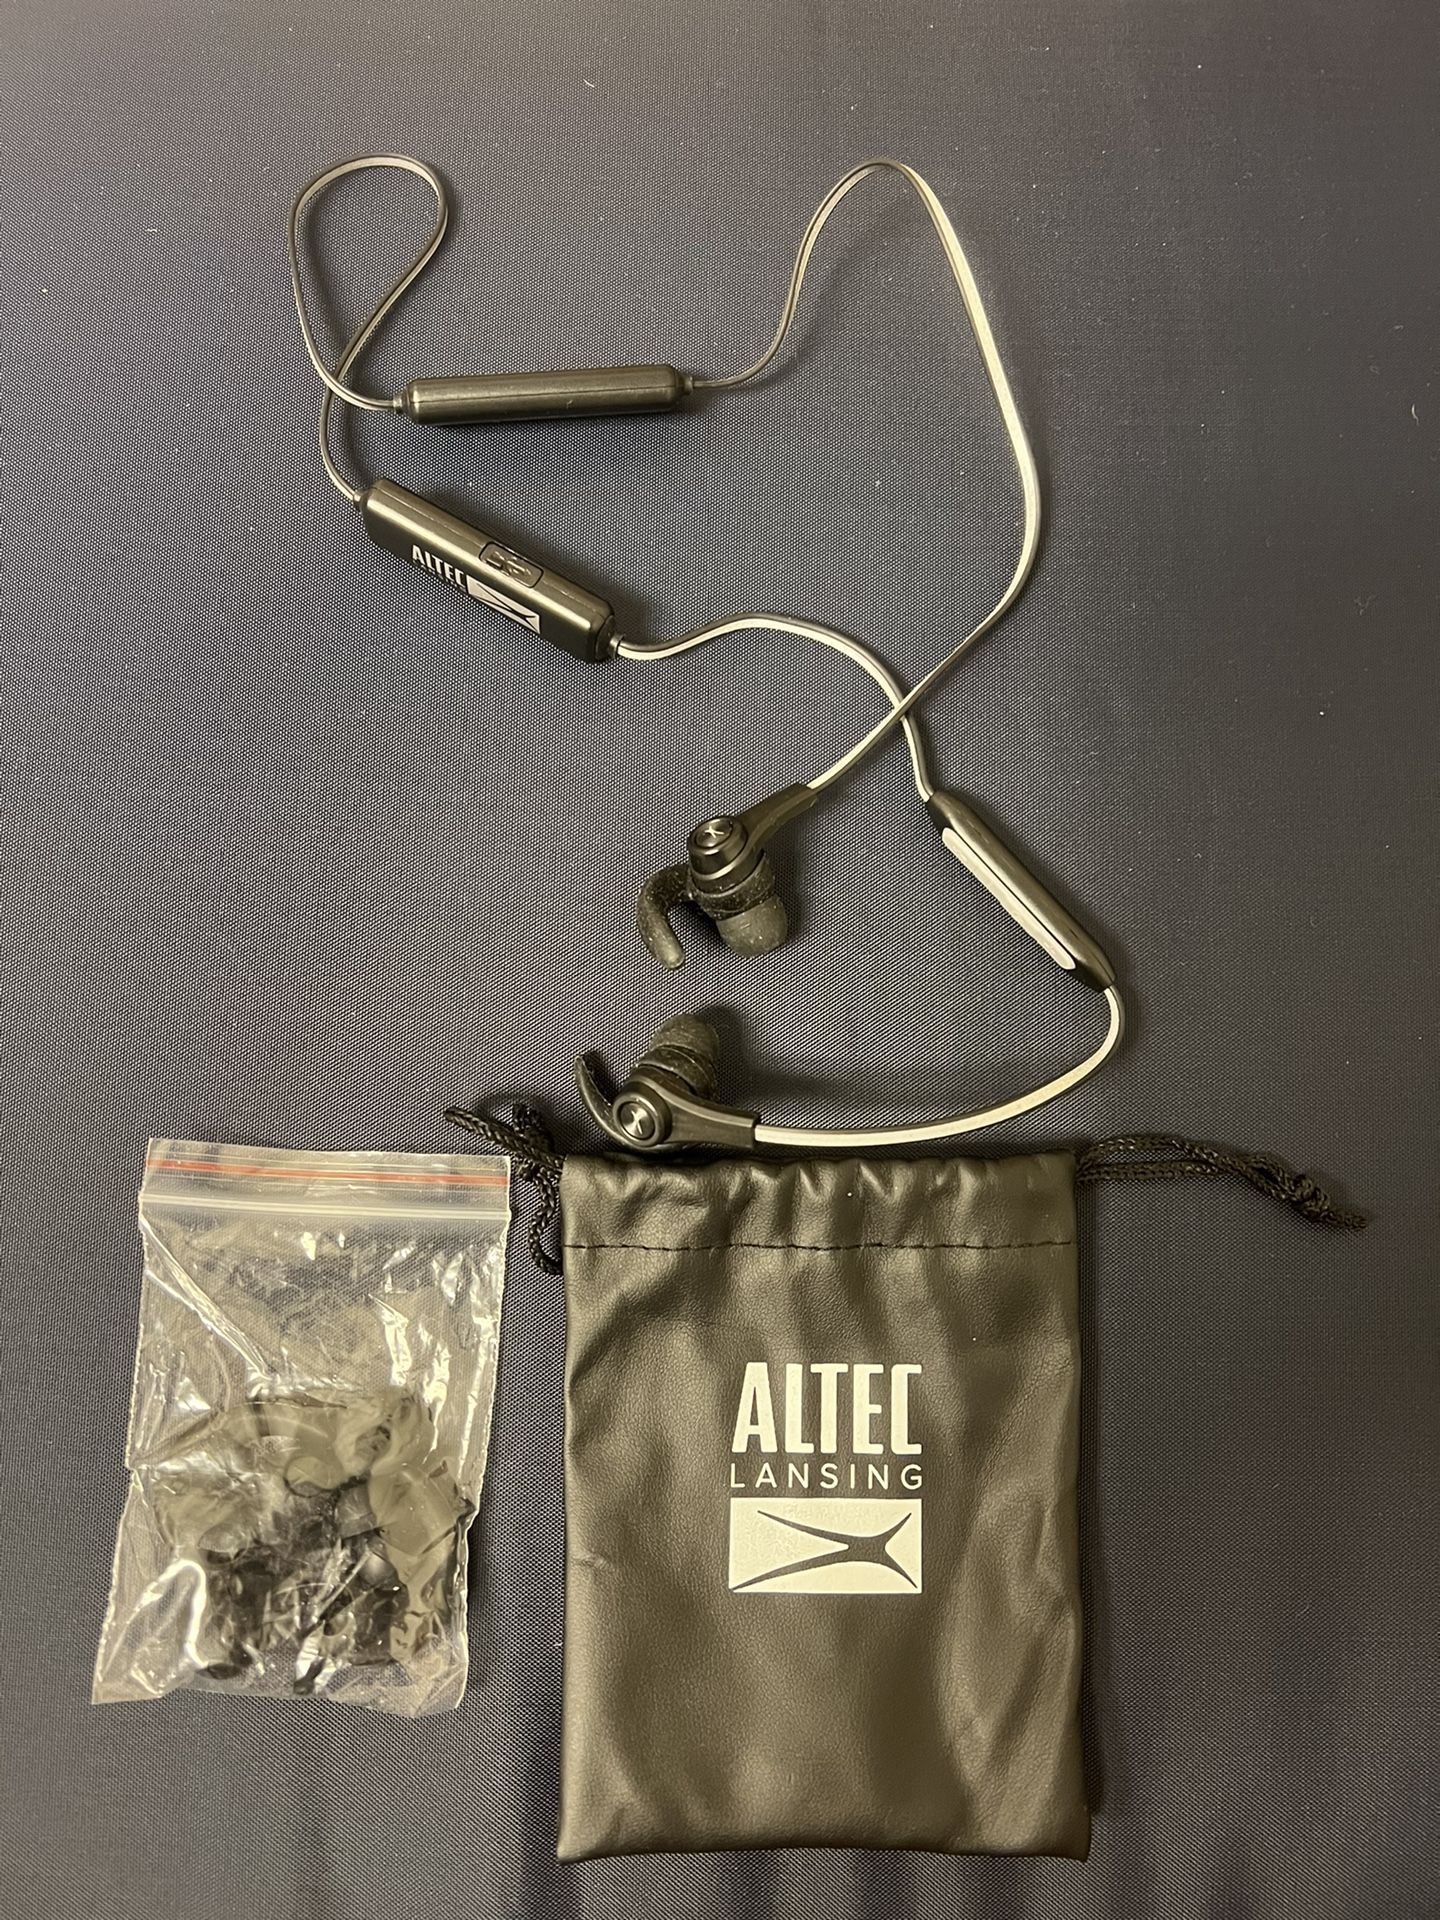 Altec Lansing Bluetooth Headphones